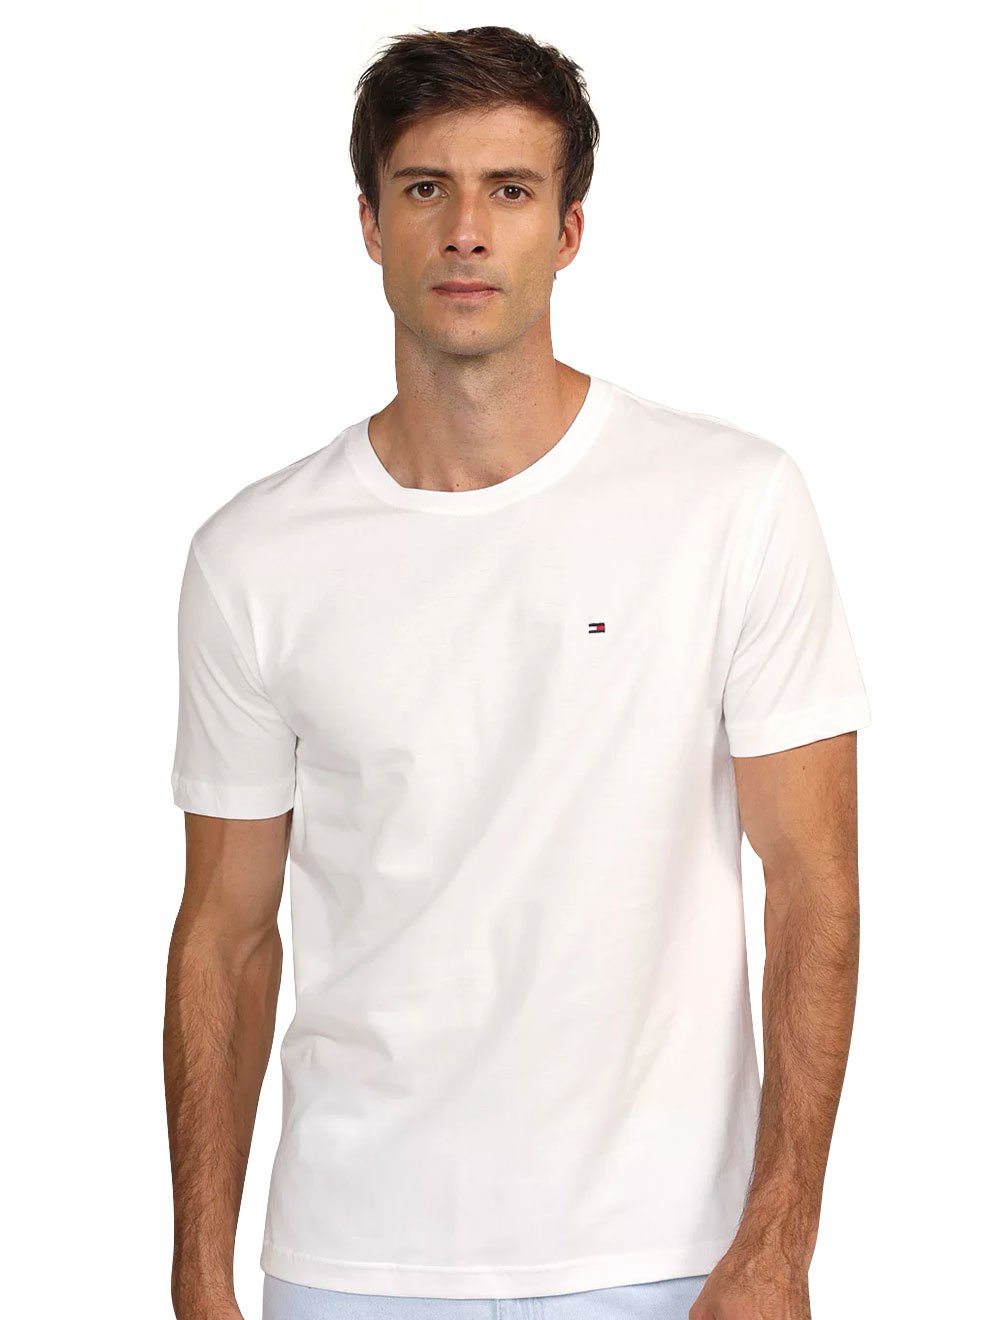 Camiseta Tommy Hilfiger Masculina Essential Cotton Branca